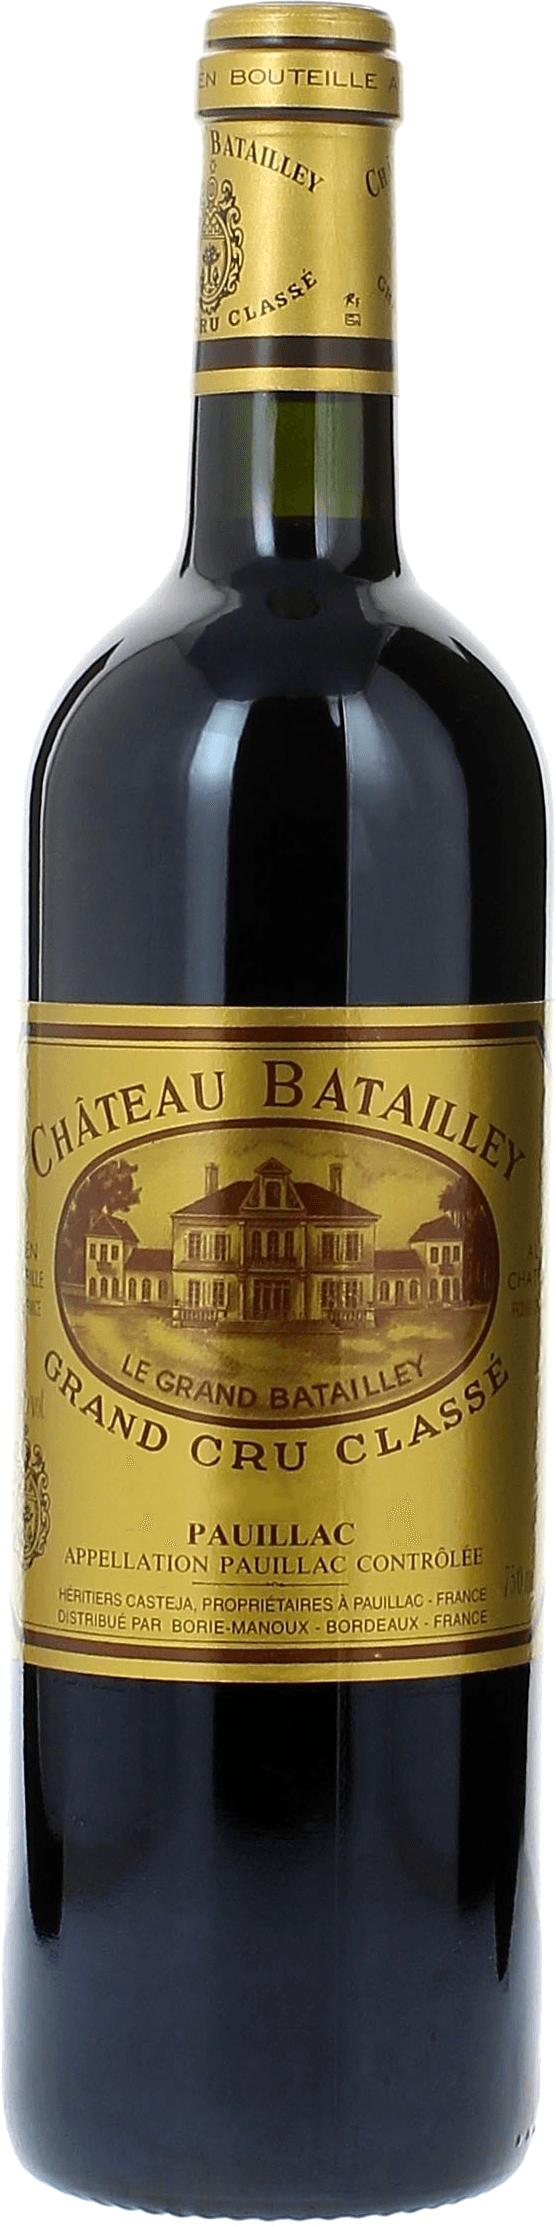 Batailley 1986 5 me Grand cru class Pauillac, Bordeaux rouge